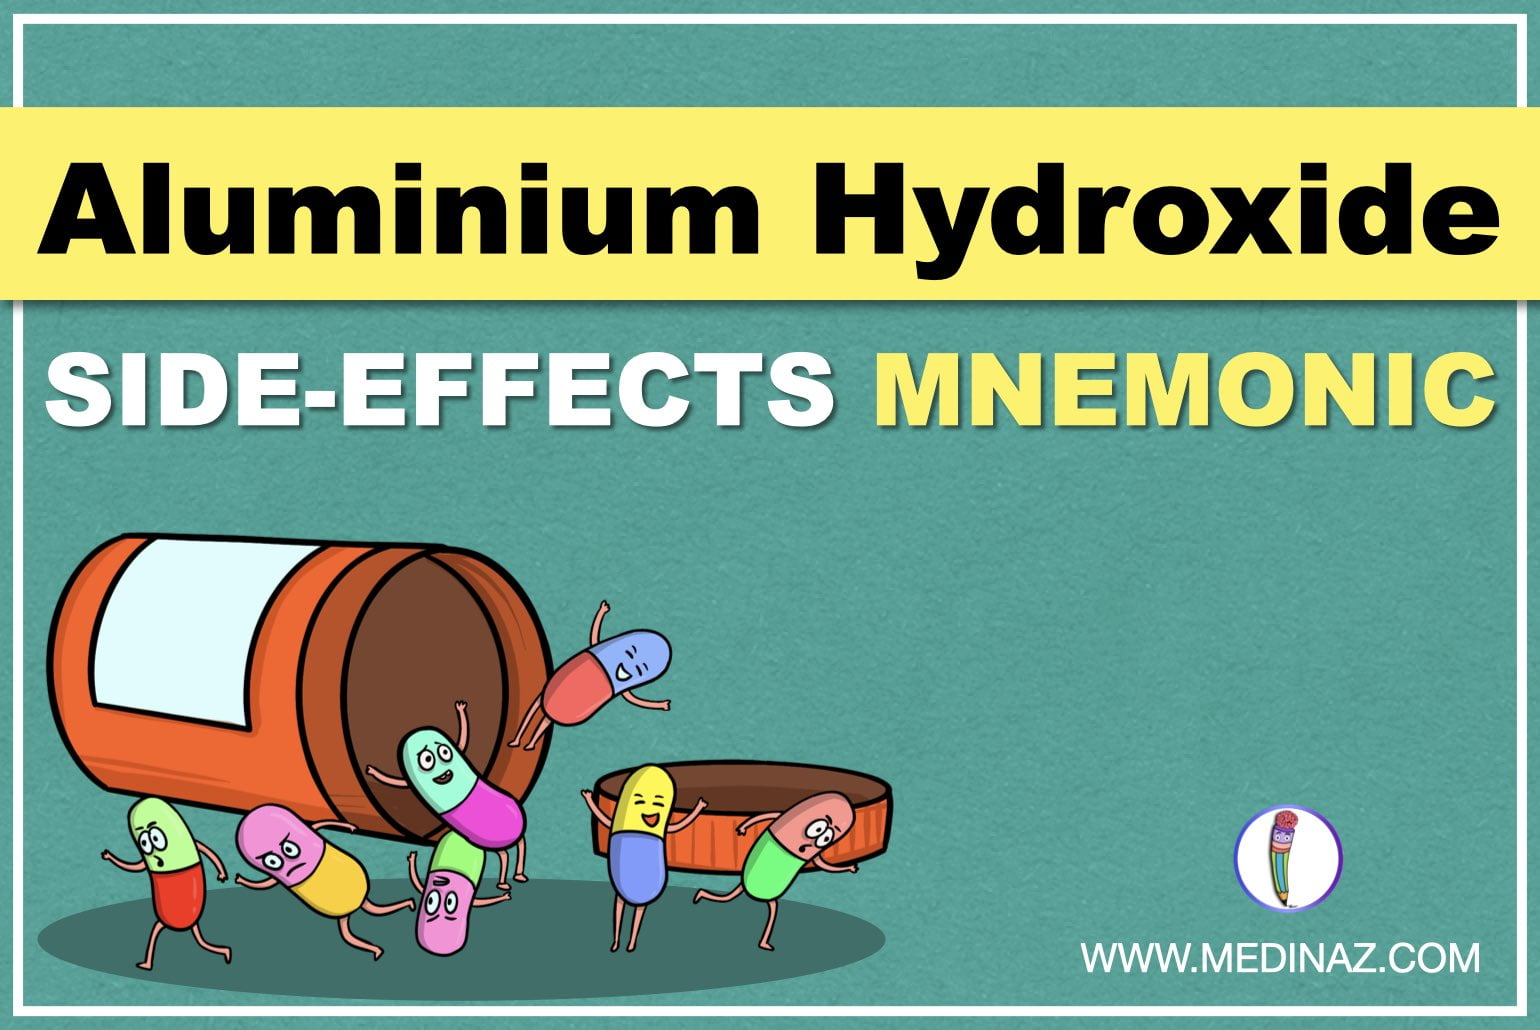 Aluminium hydroxide side-effects mnemonic